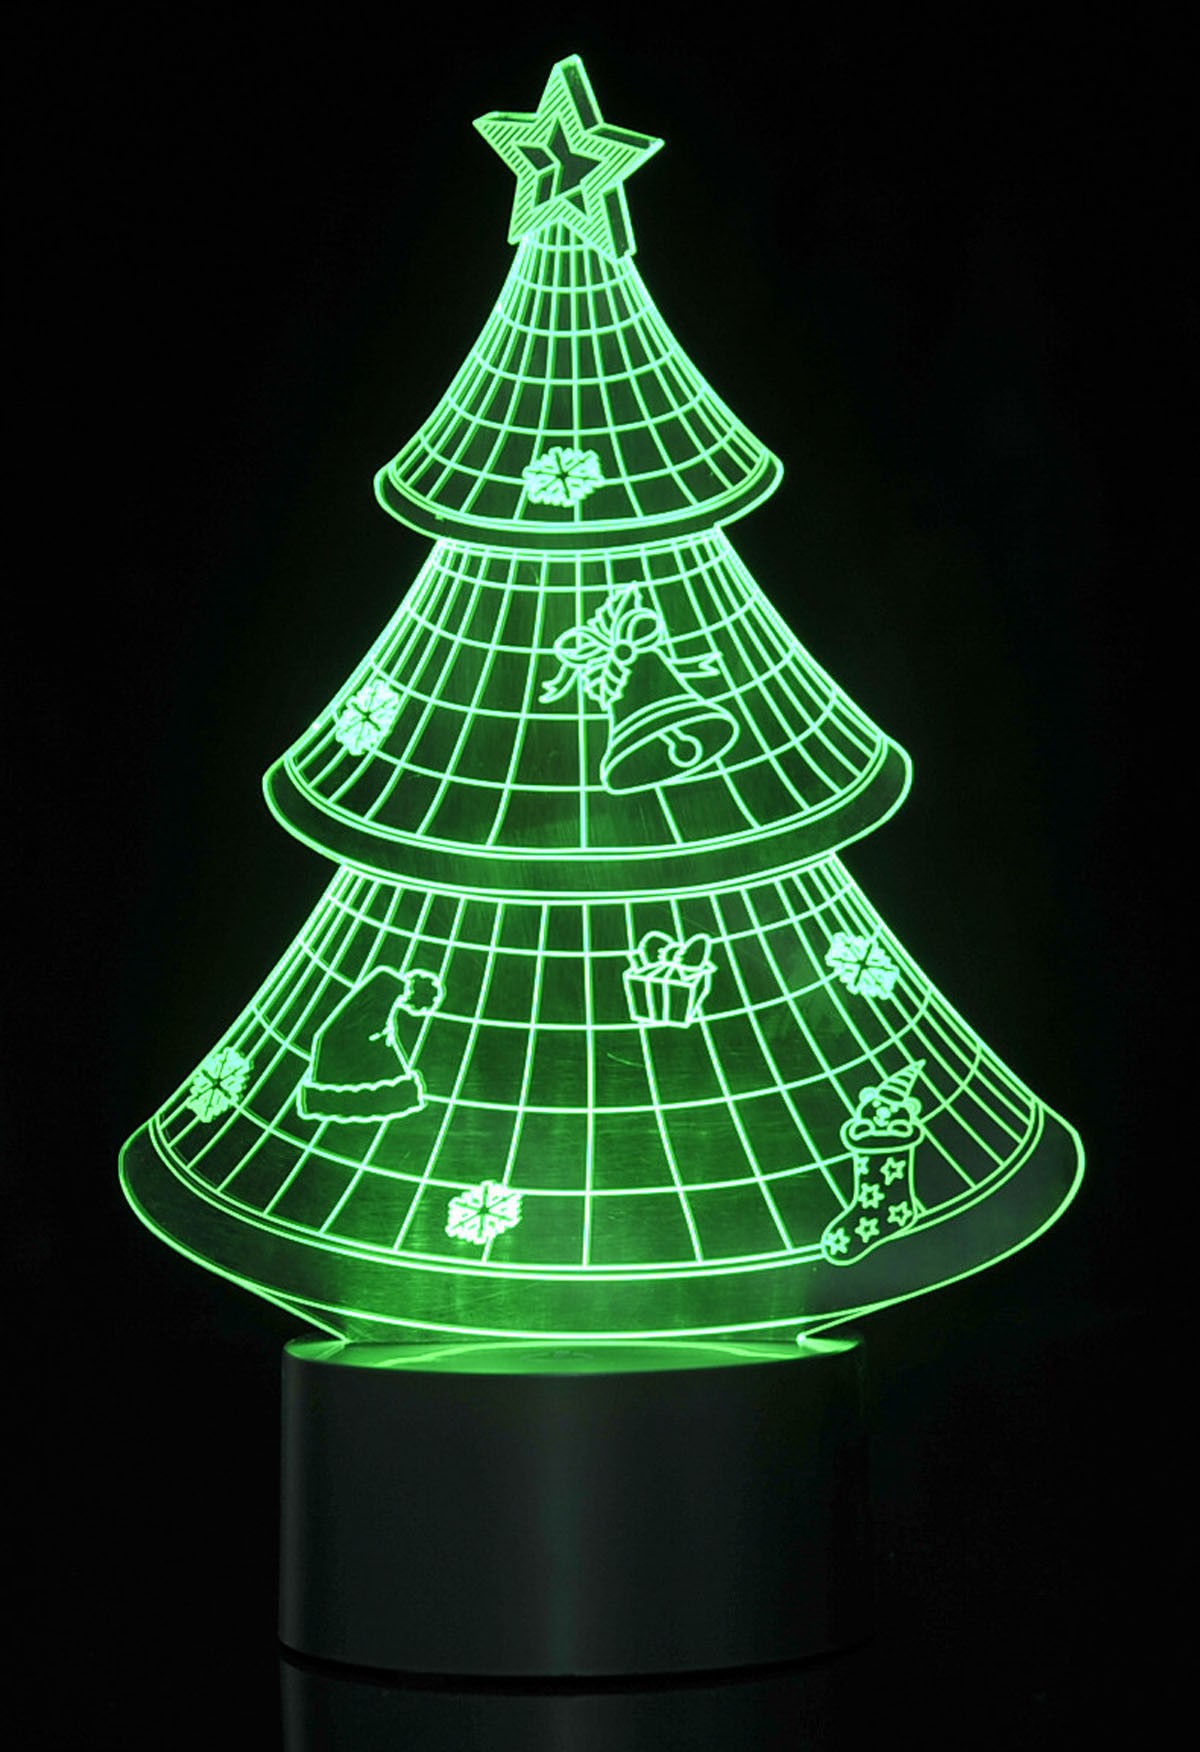 3D Christmas Tree Laser Cut Precision LED Lights